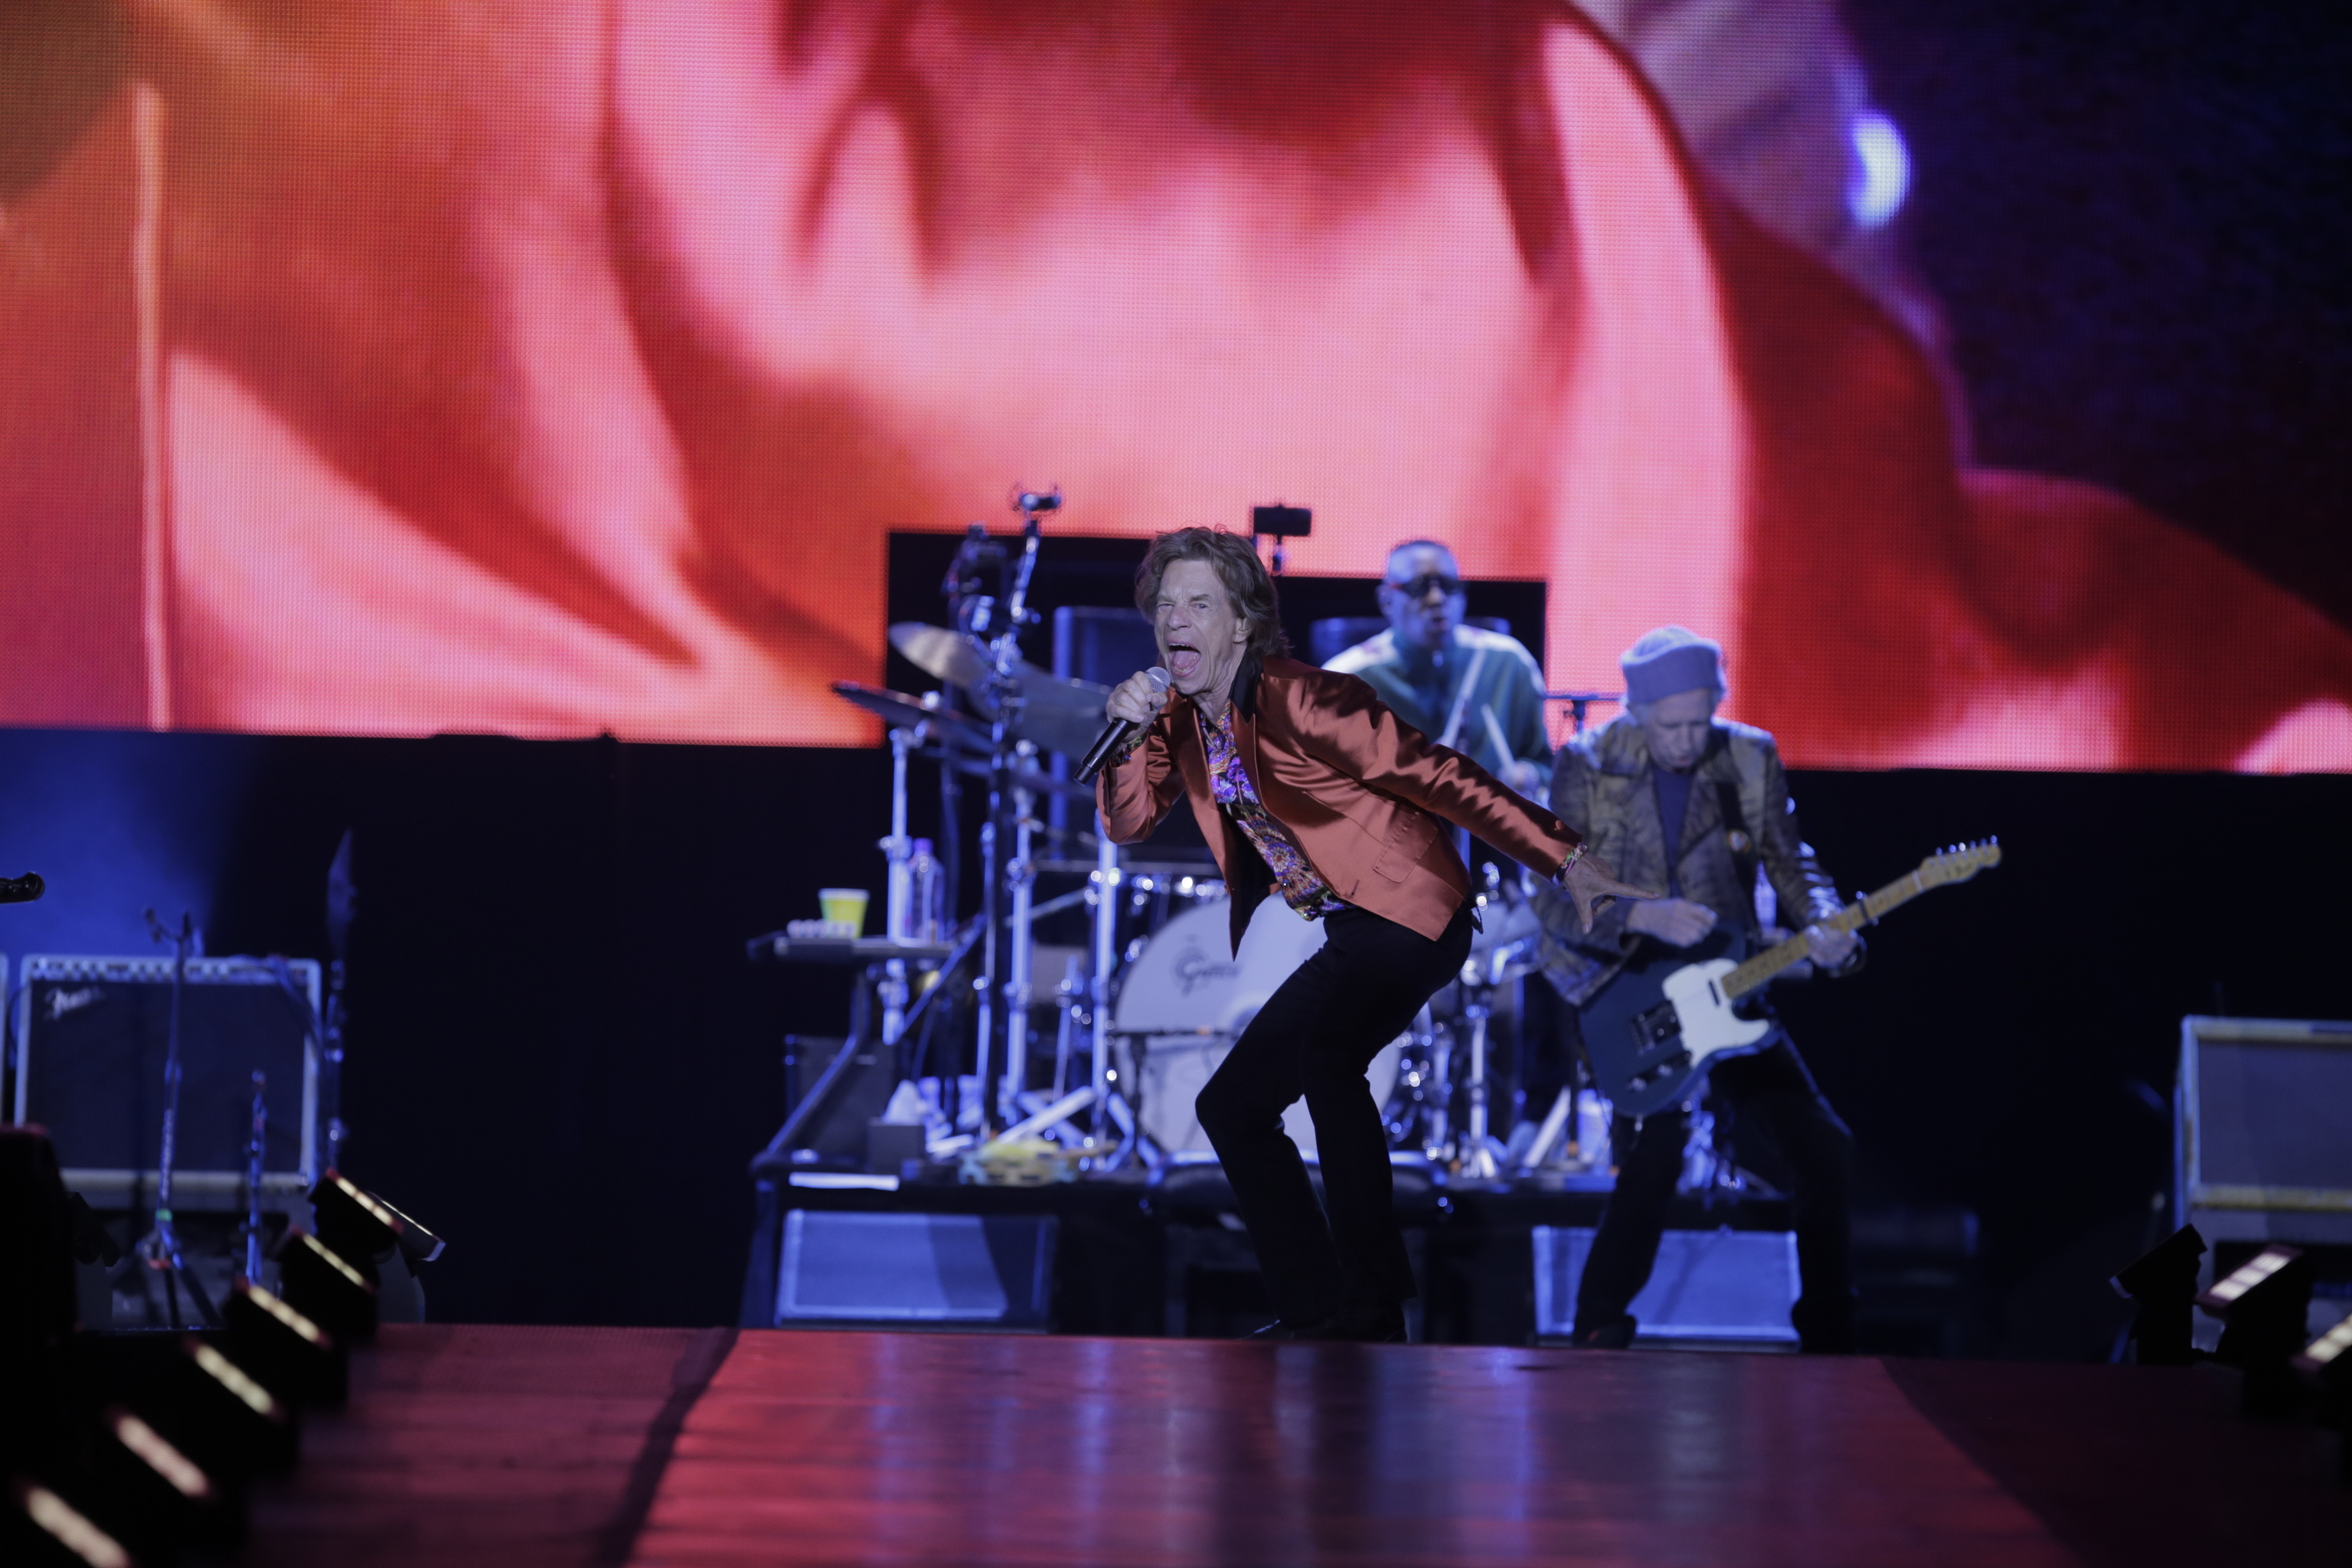 Mick Jagger, Keith Richards and Steve Jordan at Wanda Metropolitano